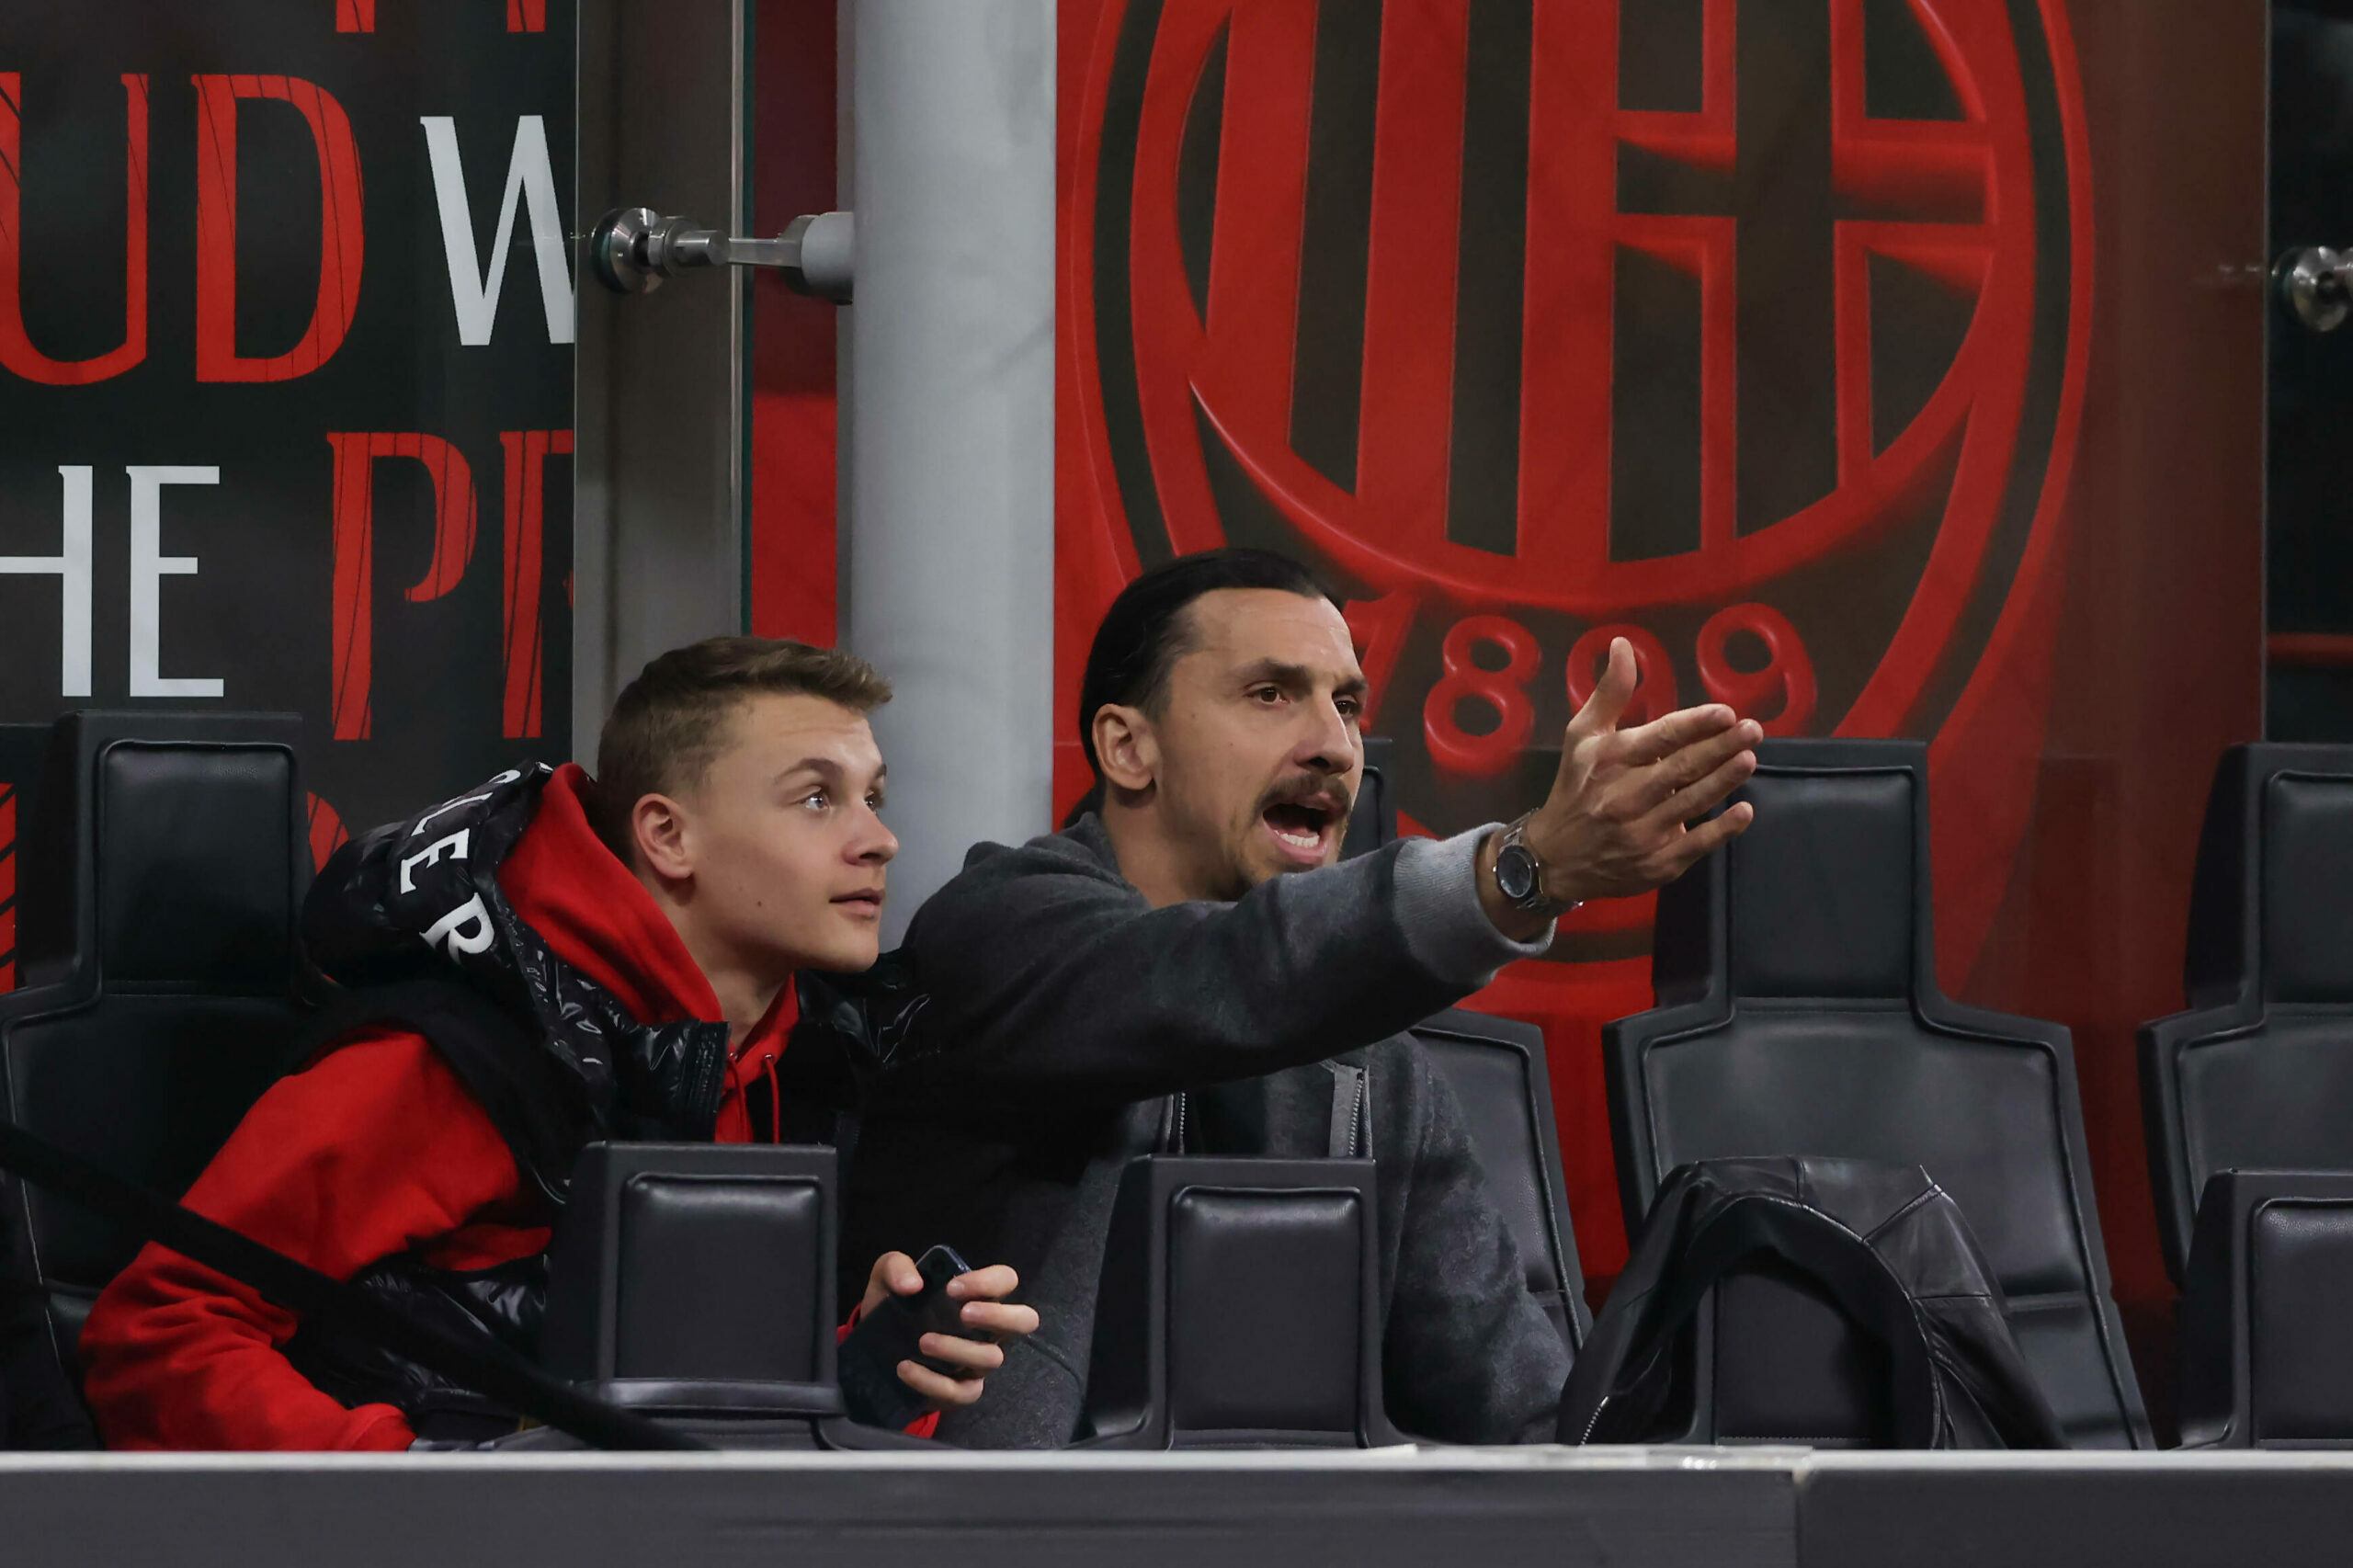 Zlatan und Maximilian Ibrahimovic